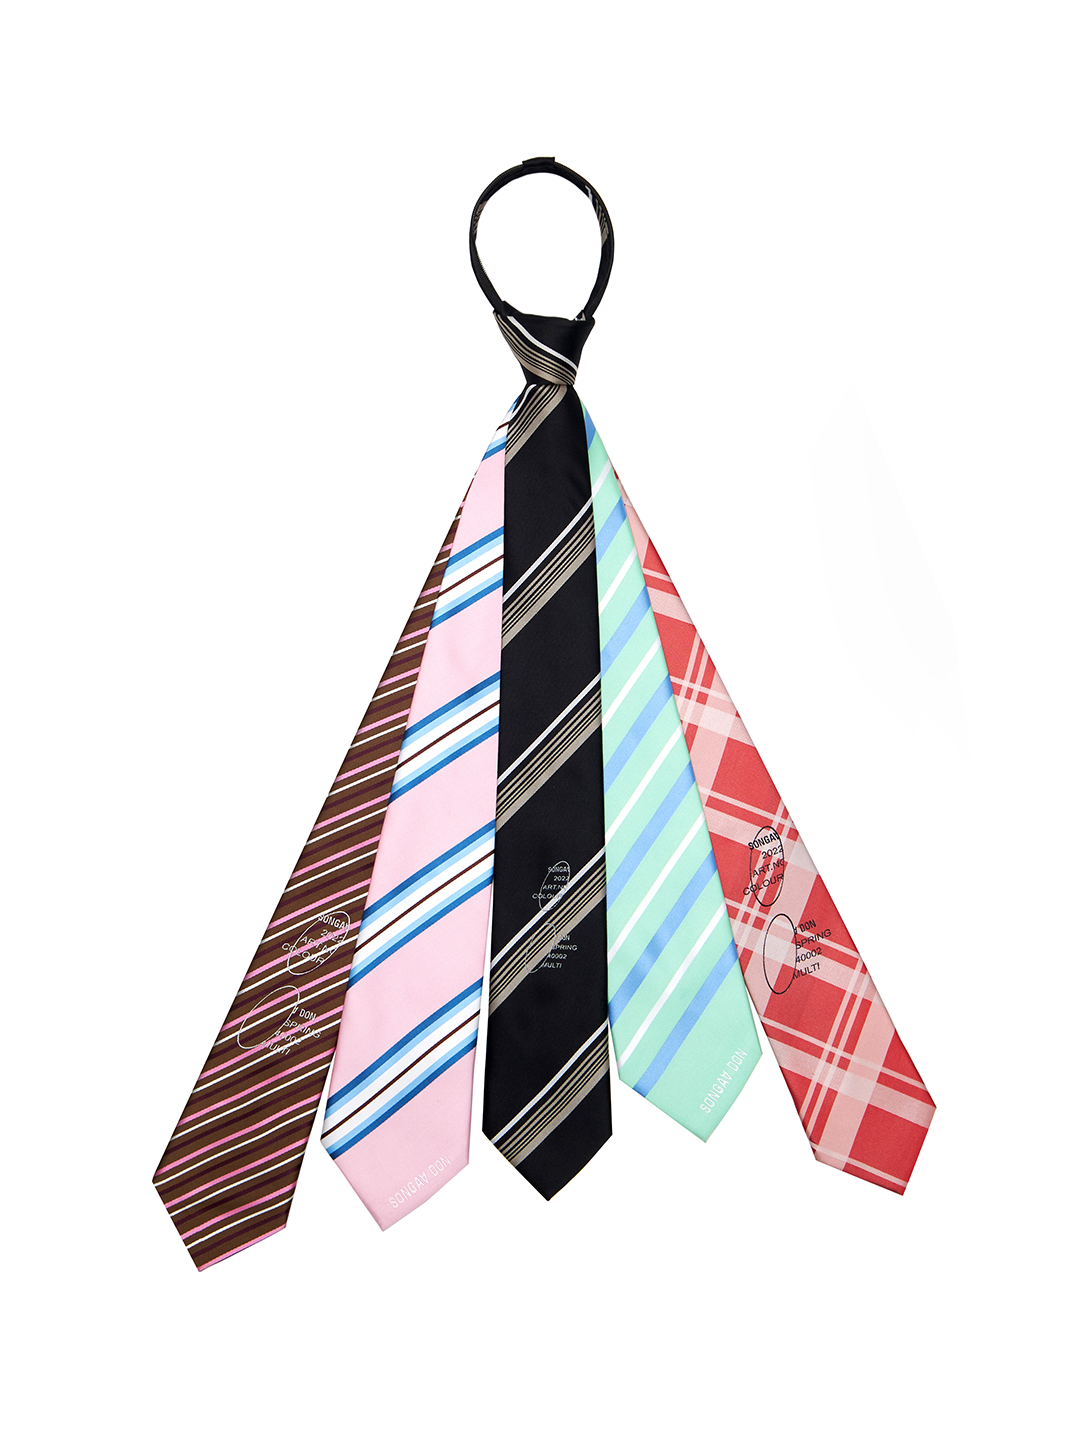 Five-color five-in-one tie